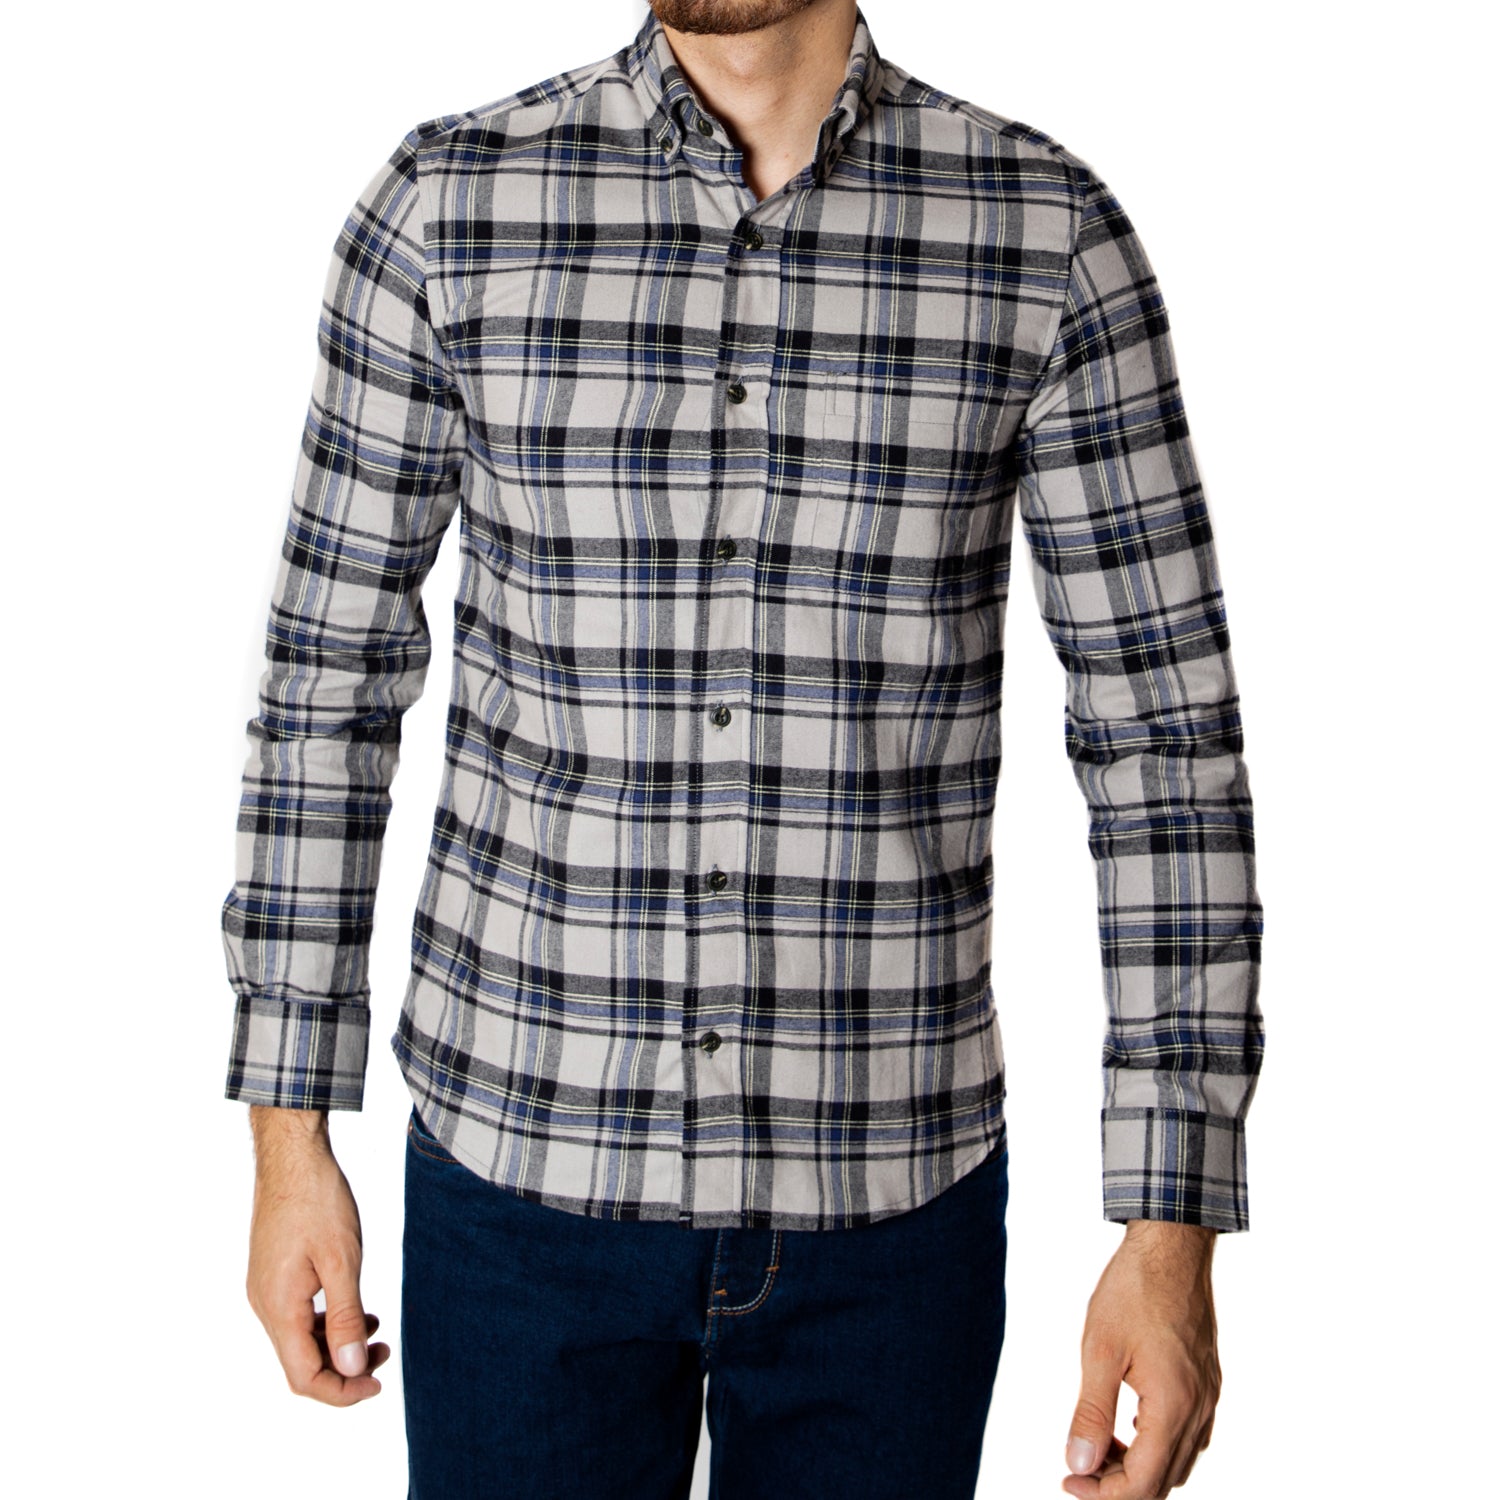 calina considerado en un día festivo Camisa a cuadros para invierno, estilo franela, hombre – Lima Shirt Co.